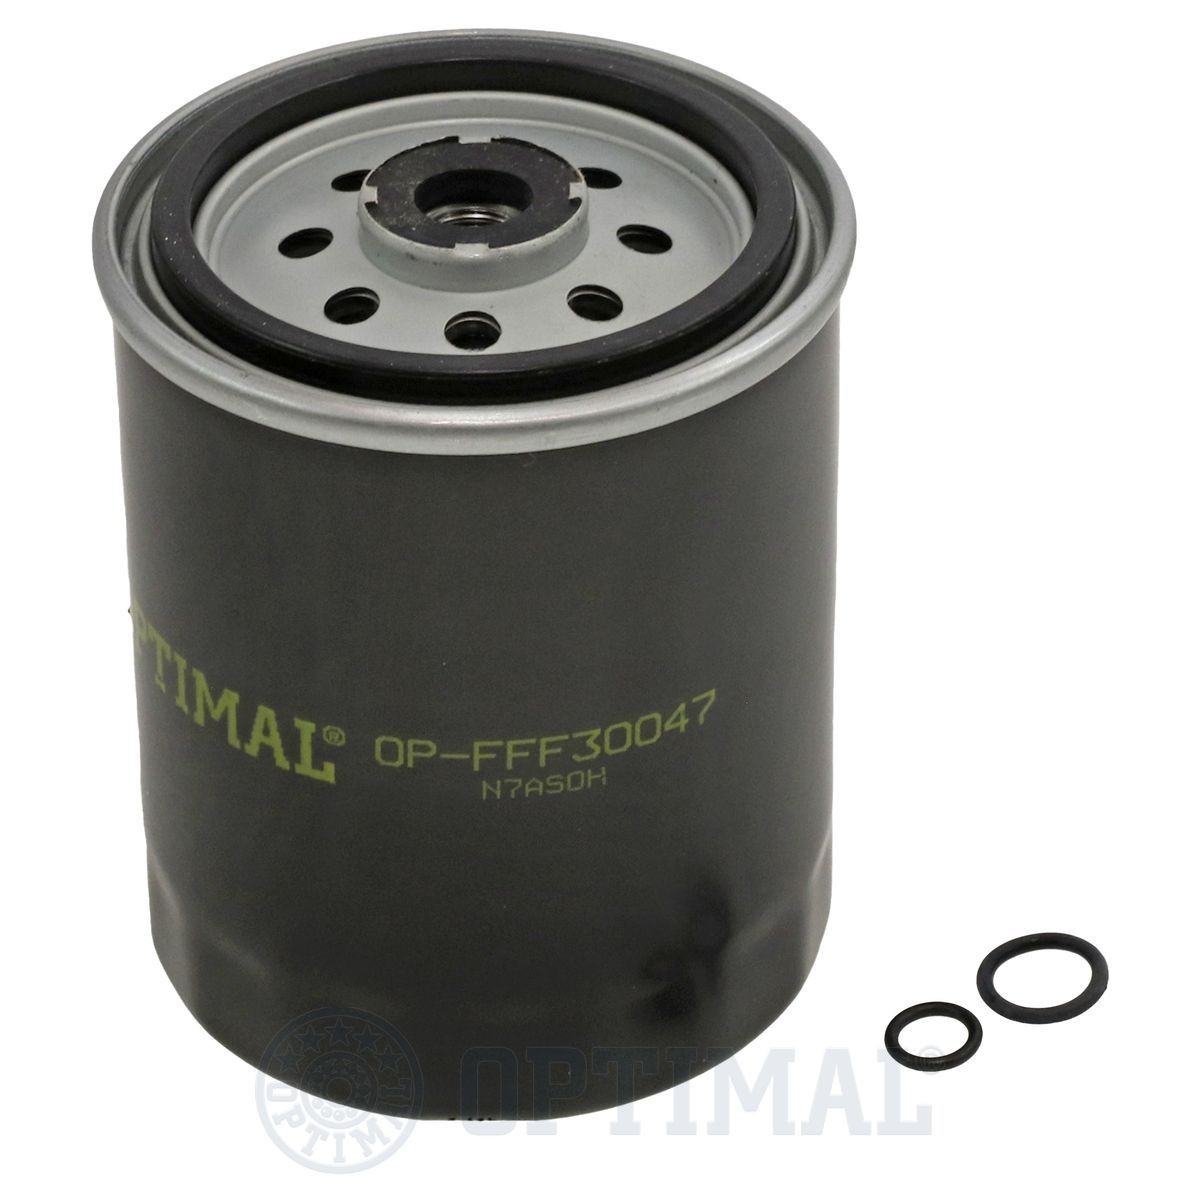 OPTIMAL OP-FFF30047 Fuel filter A601 090 16 52